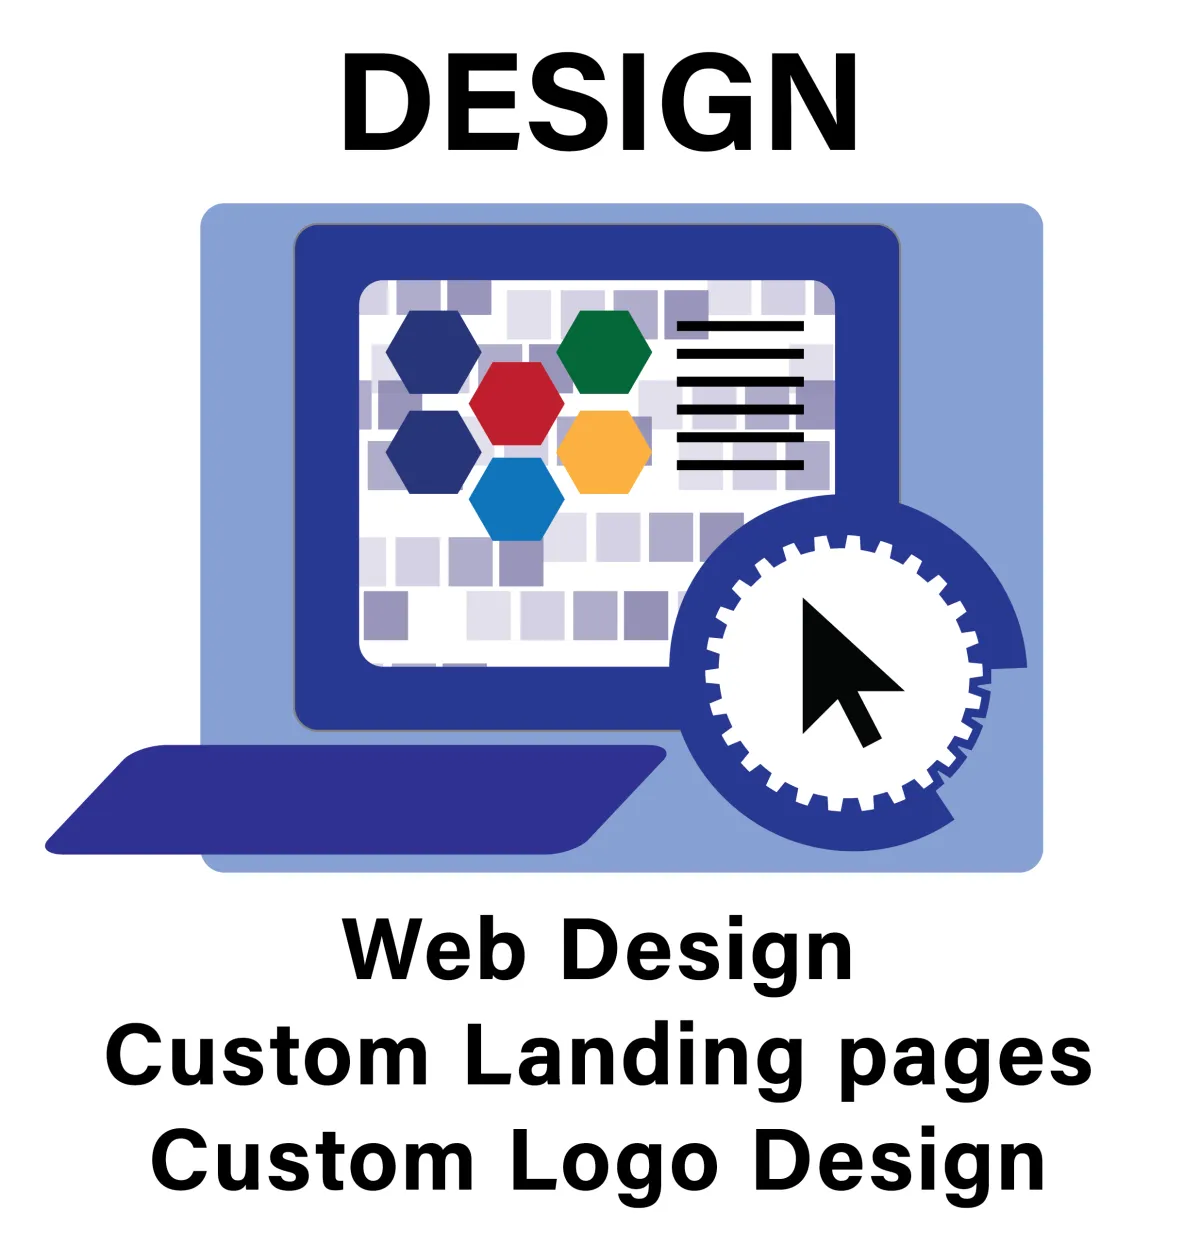 Web Design  Custom Landing pages  Custom Logo Design